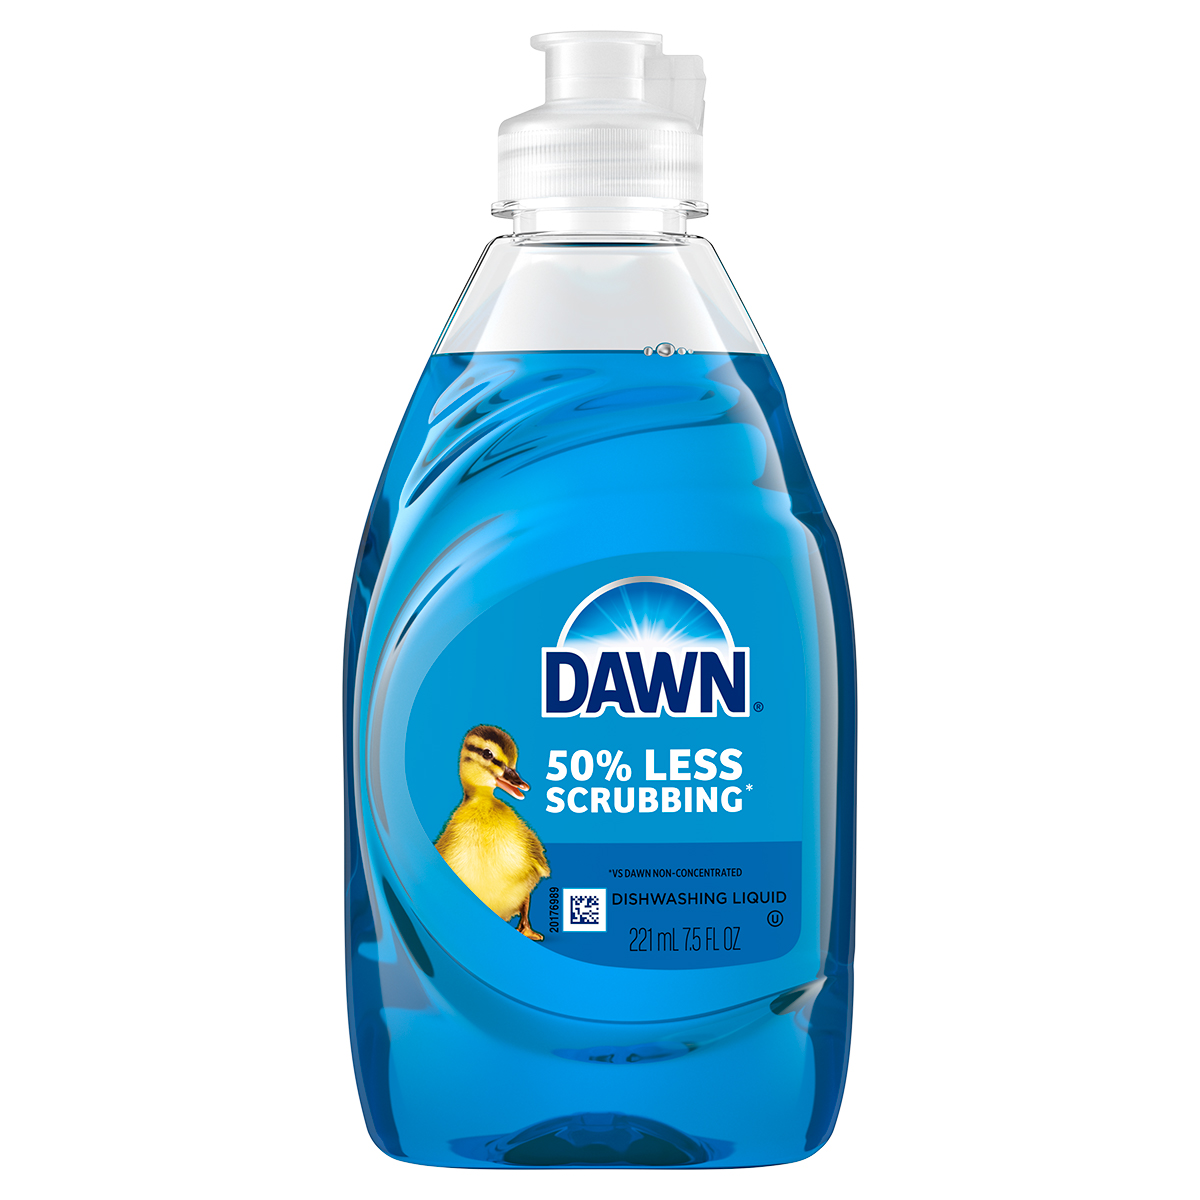 7.5 oz Dawn Dish Soap (Original or Anti-Bacterial) at Walgreens + Free Store Pickup ($10 Minimum Order) $0.44 YMMV